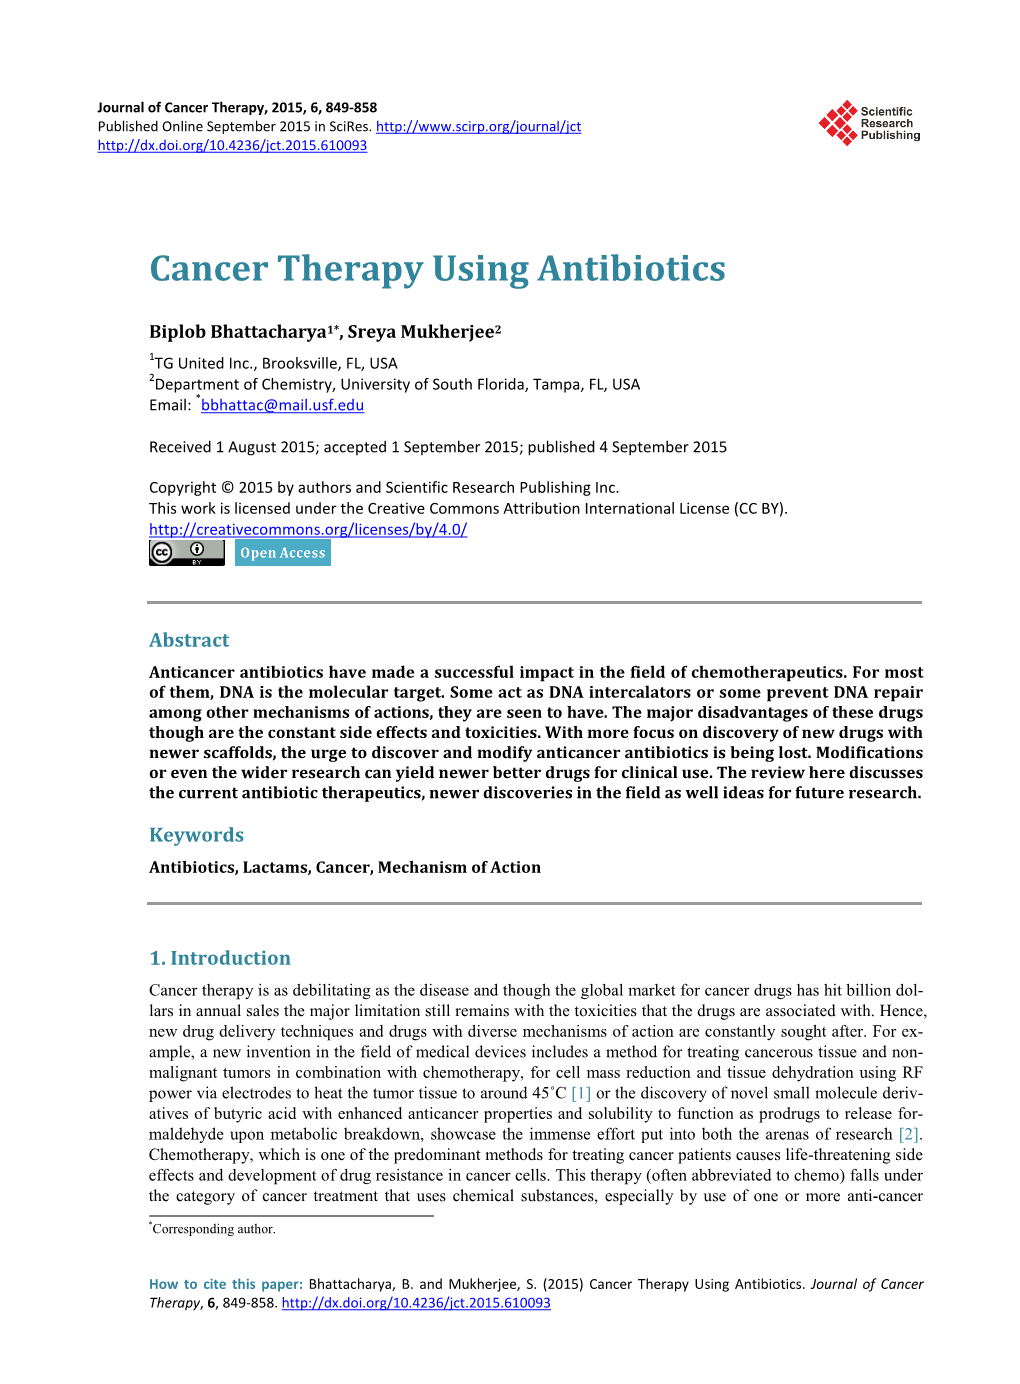 Cancer Therapy Using Antibiotics